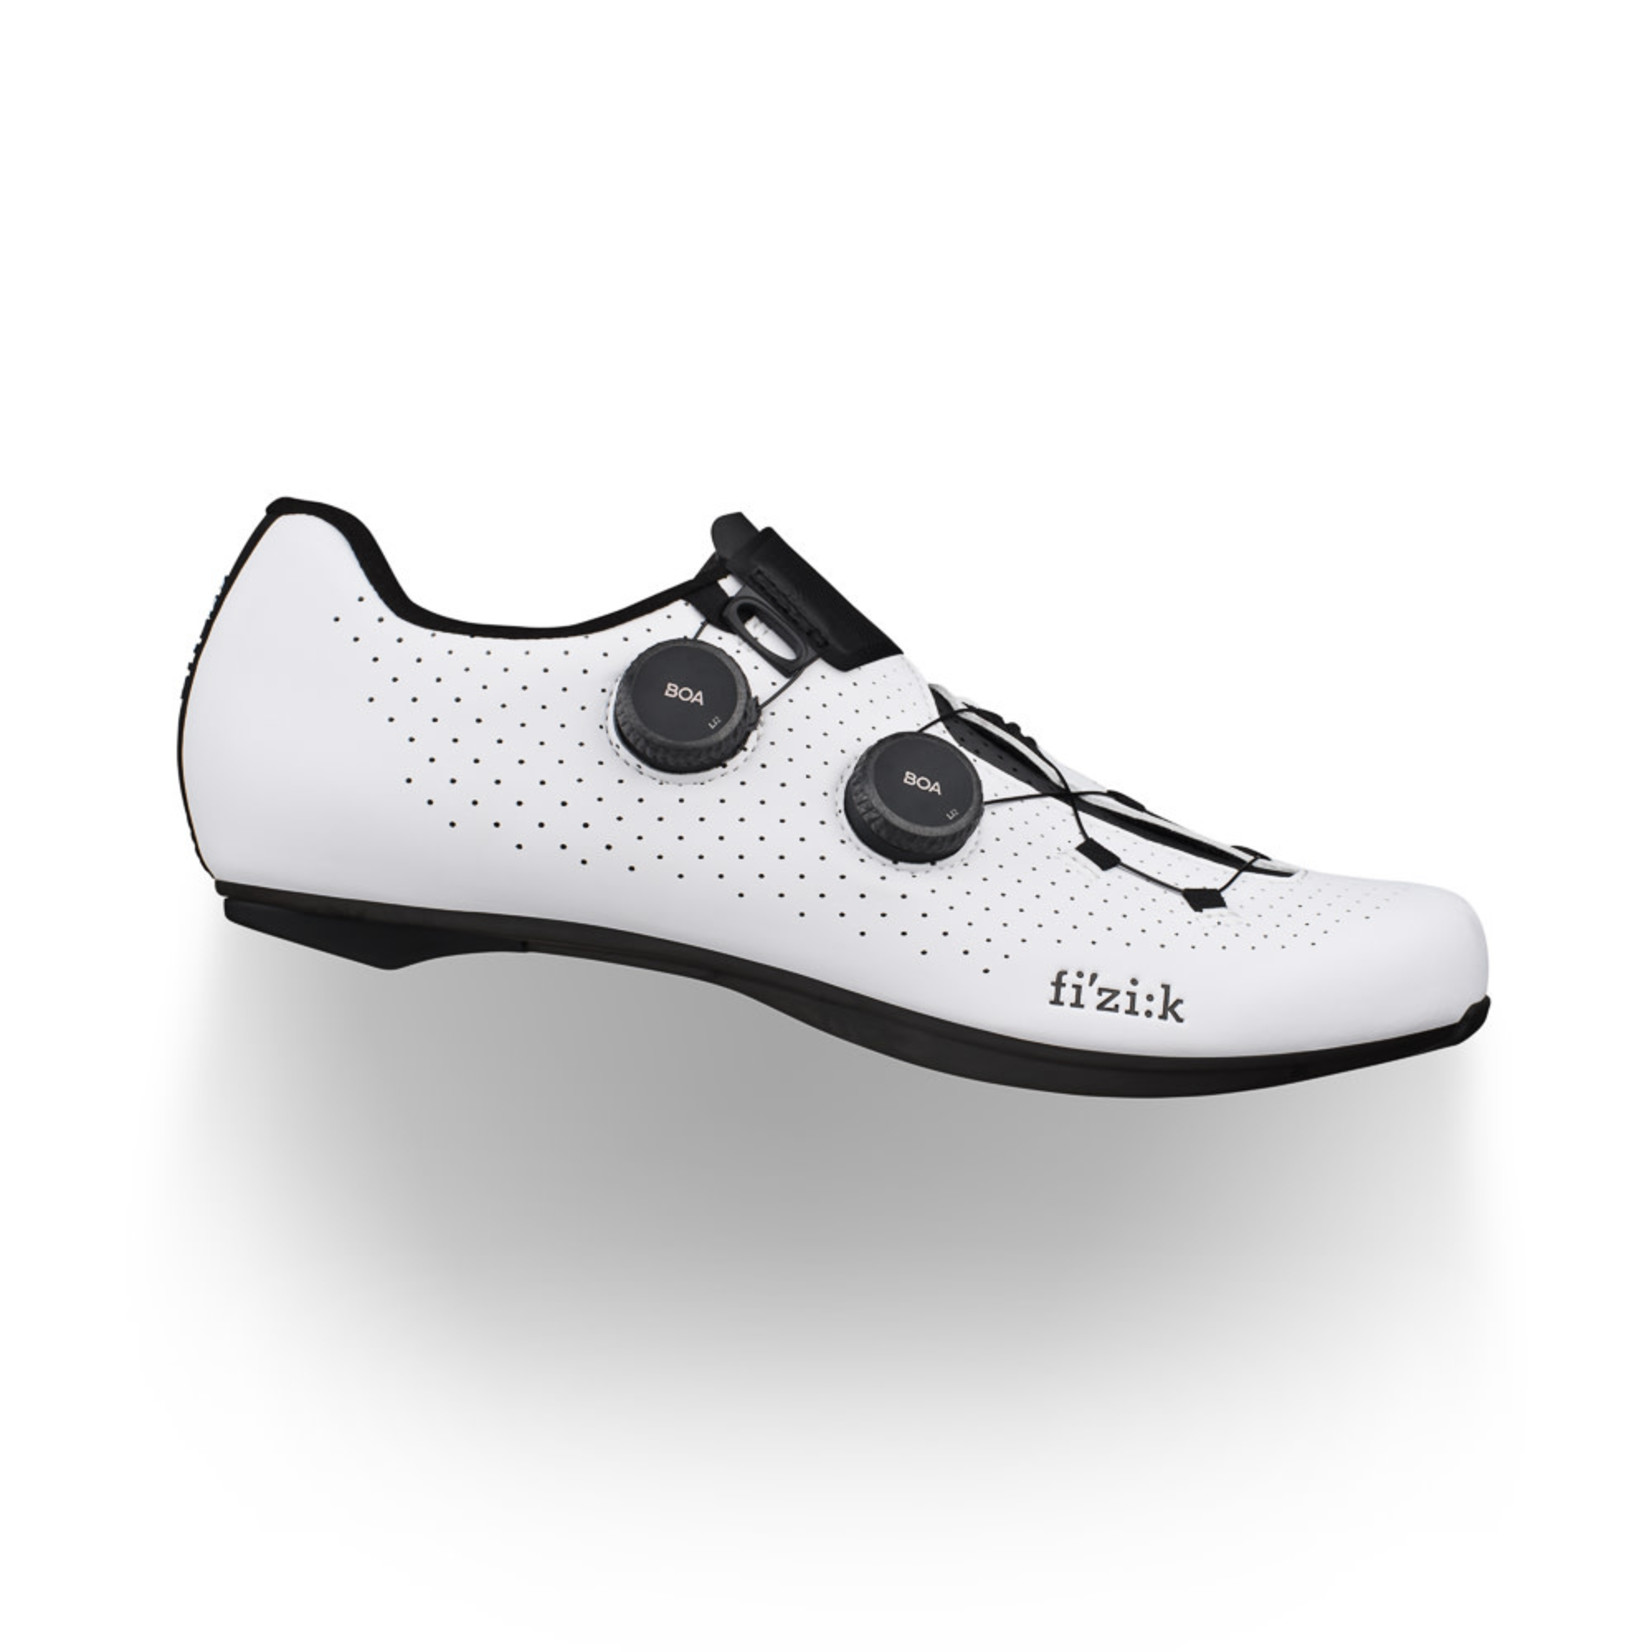 Fizik Fizik Vento Infinito Full Carbon Bike/Cycling Shoes - White/Black